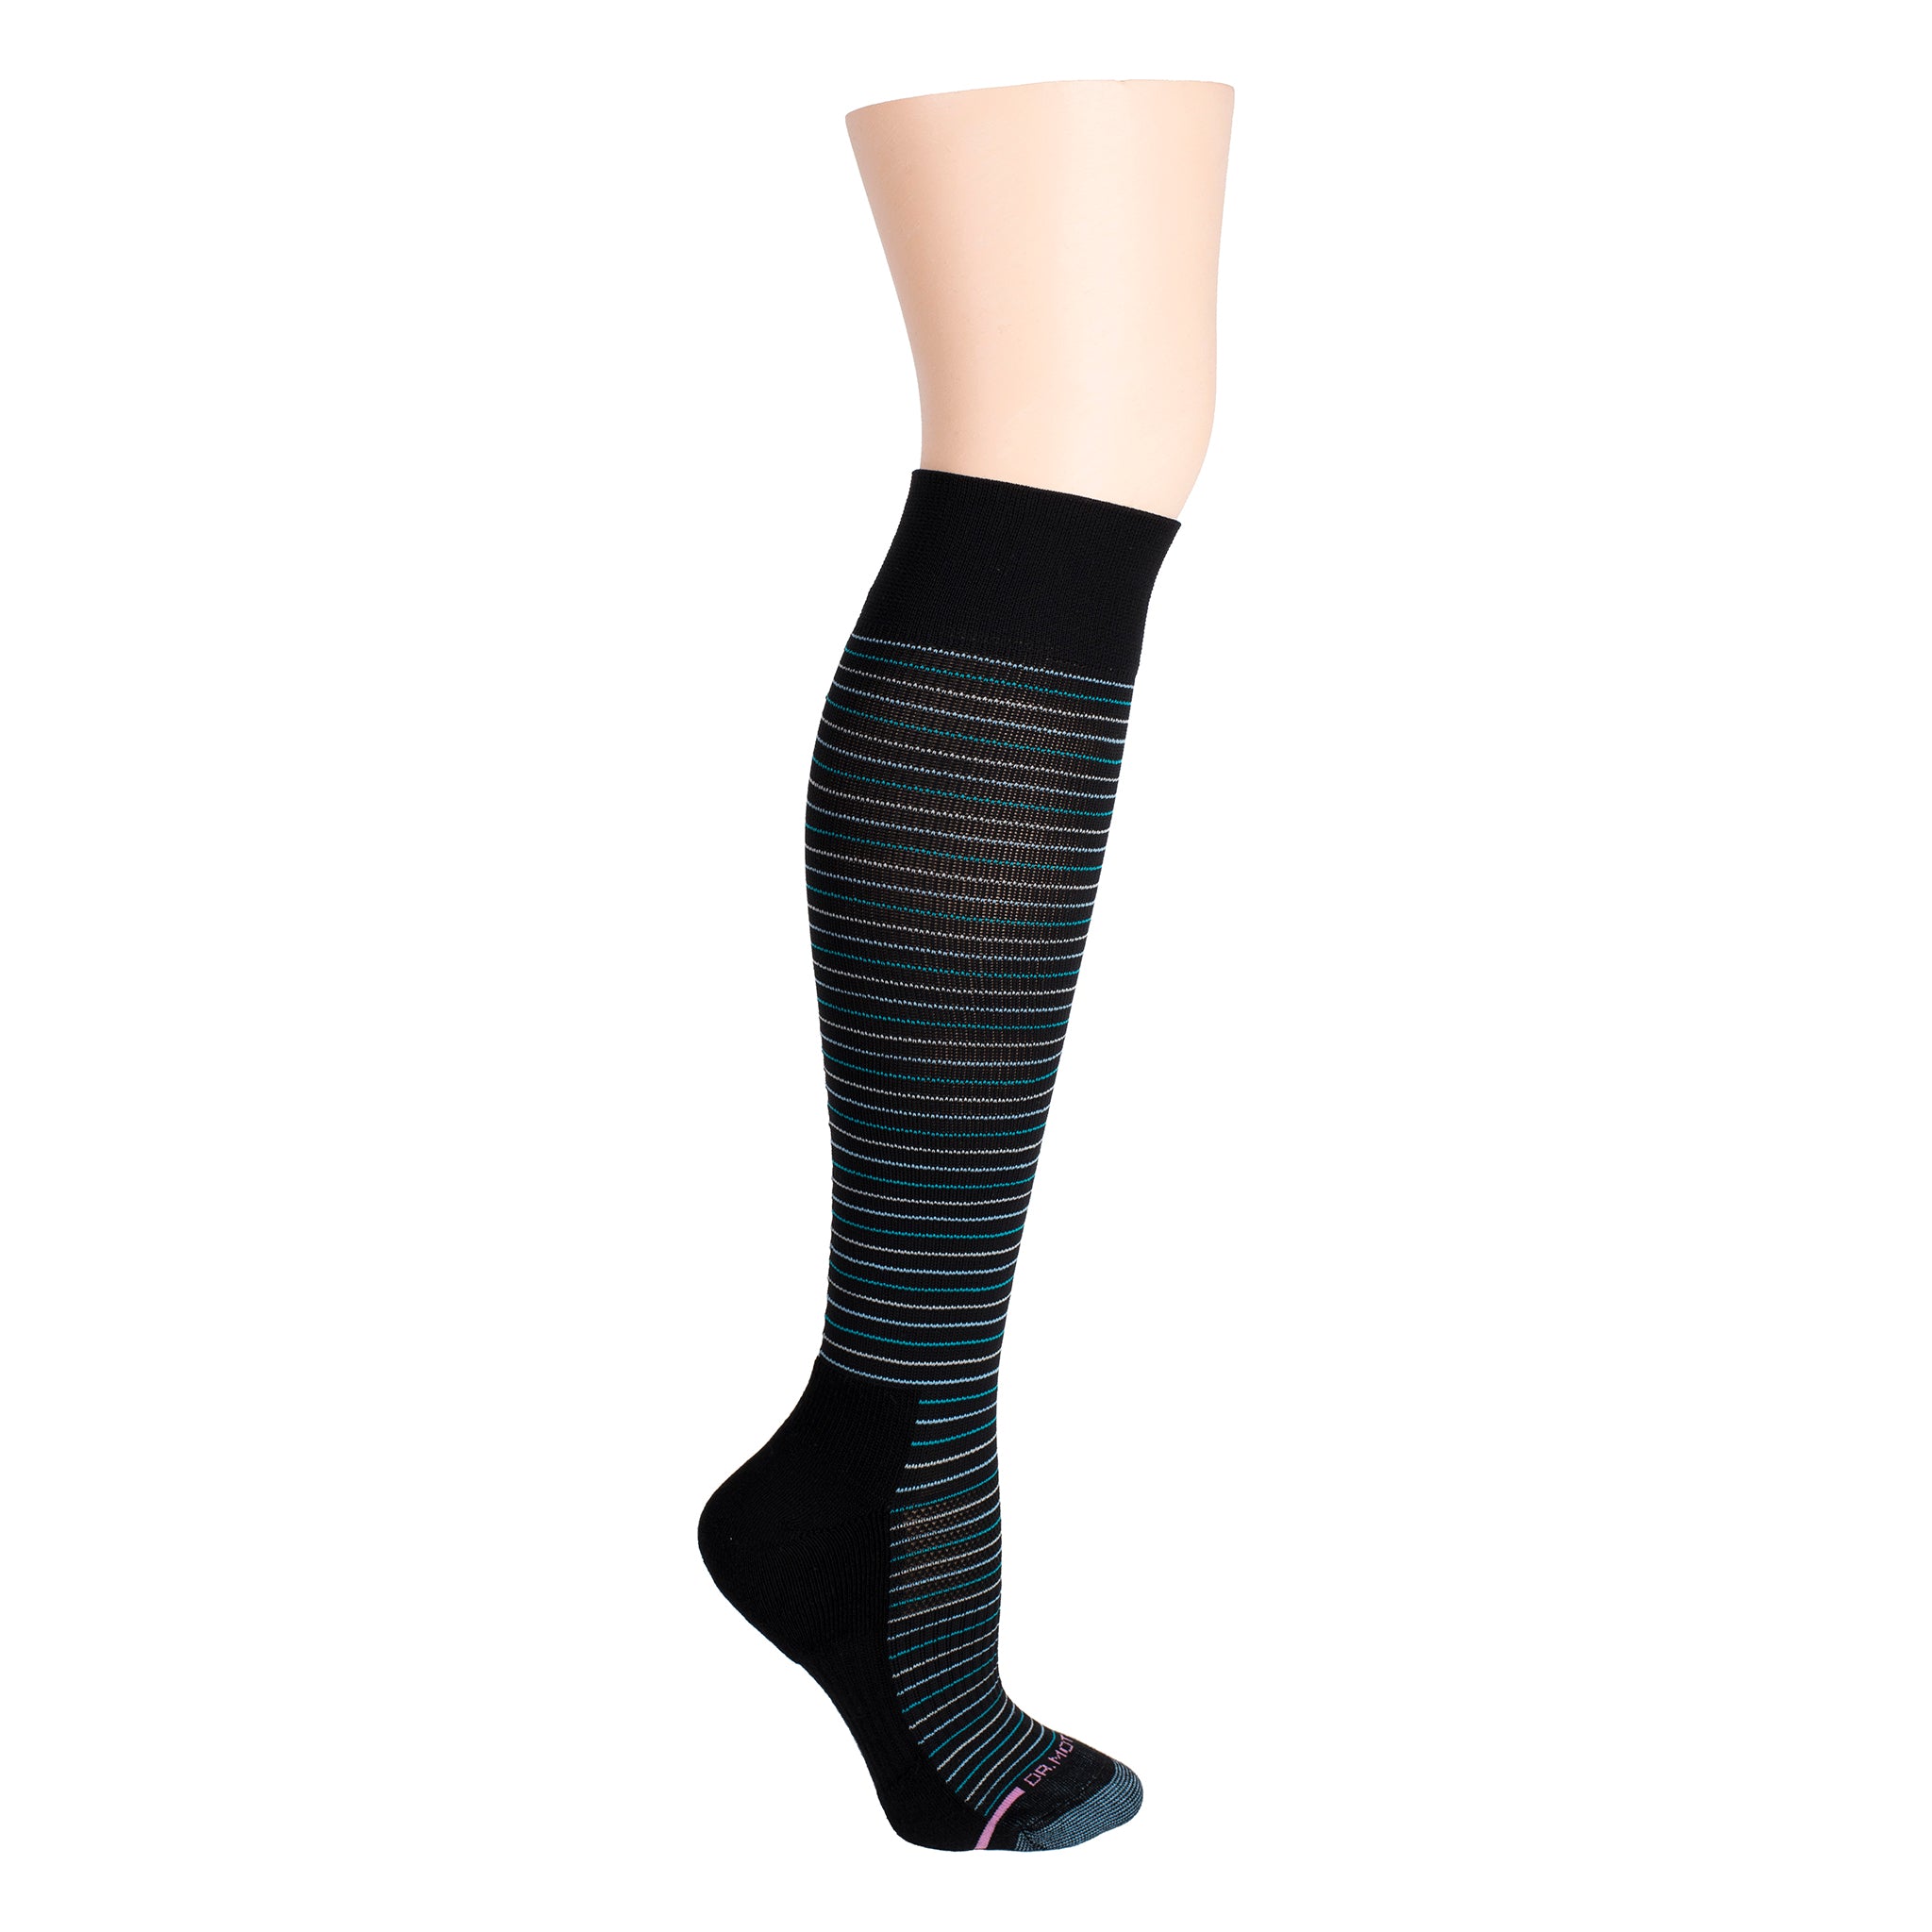 Tri-Color Stripe | Knee-High Compression Socks For Women